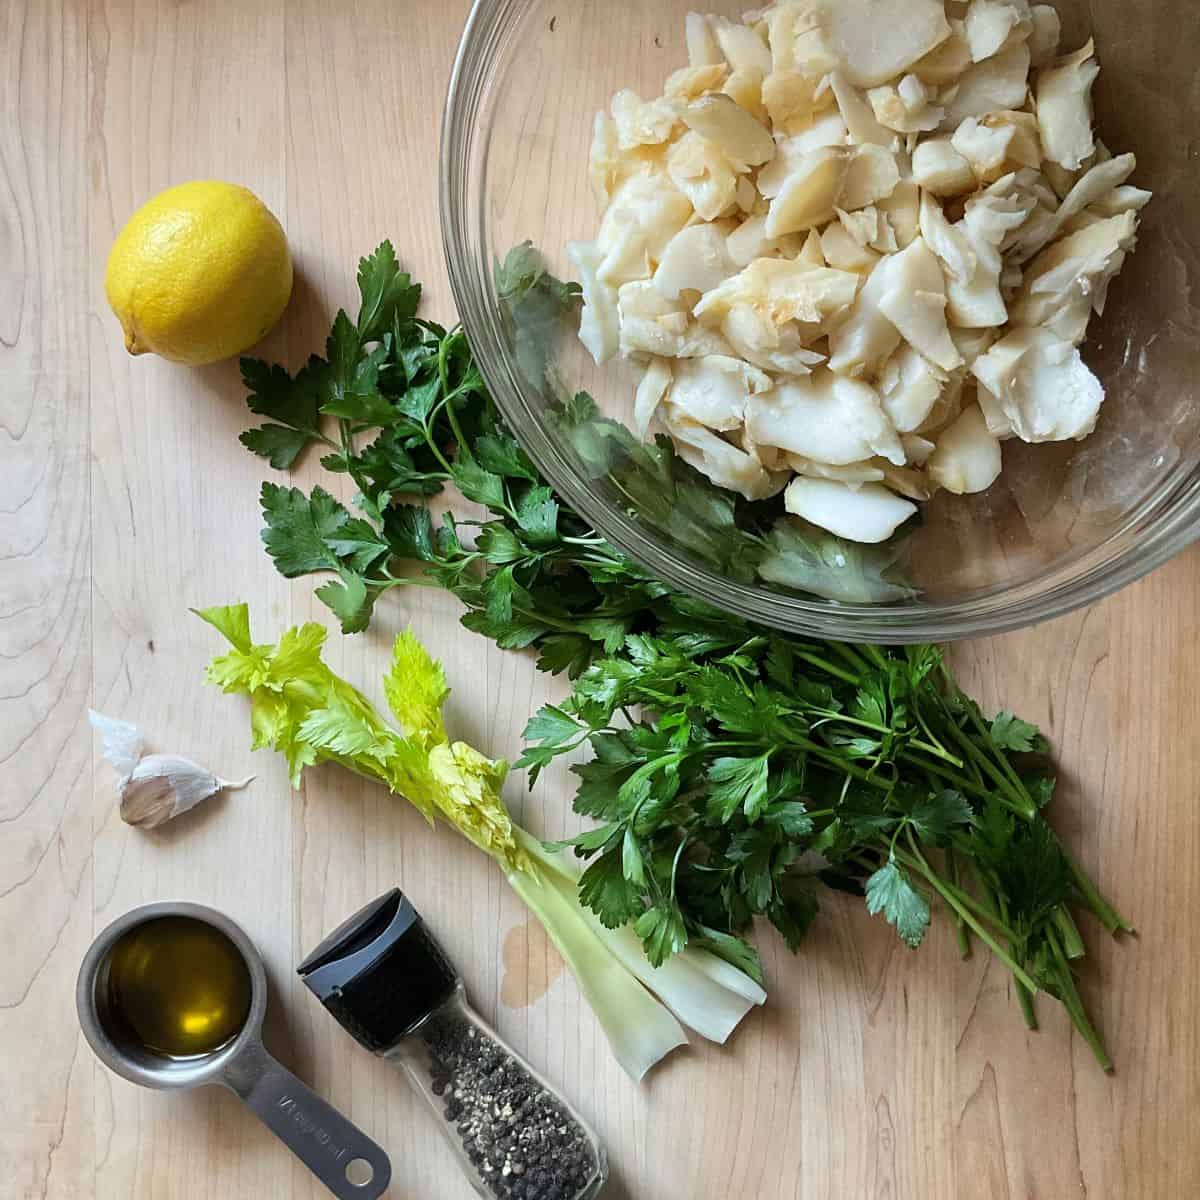 Ingredients to make the Italian salt cod salad.